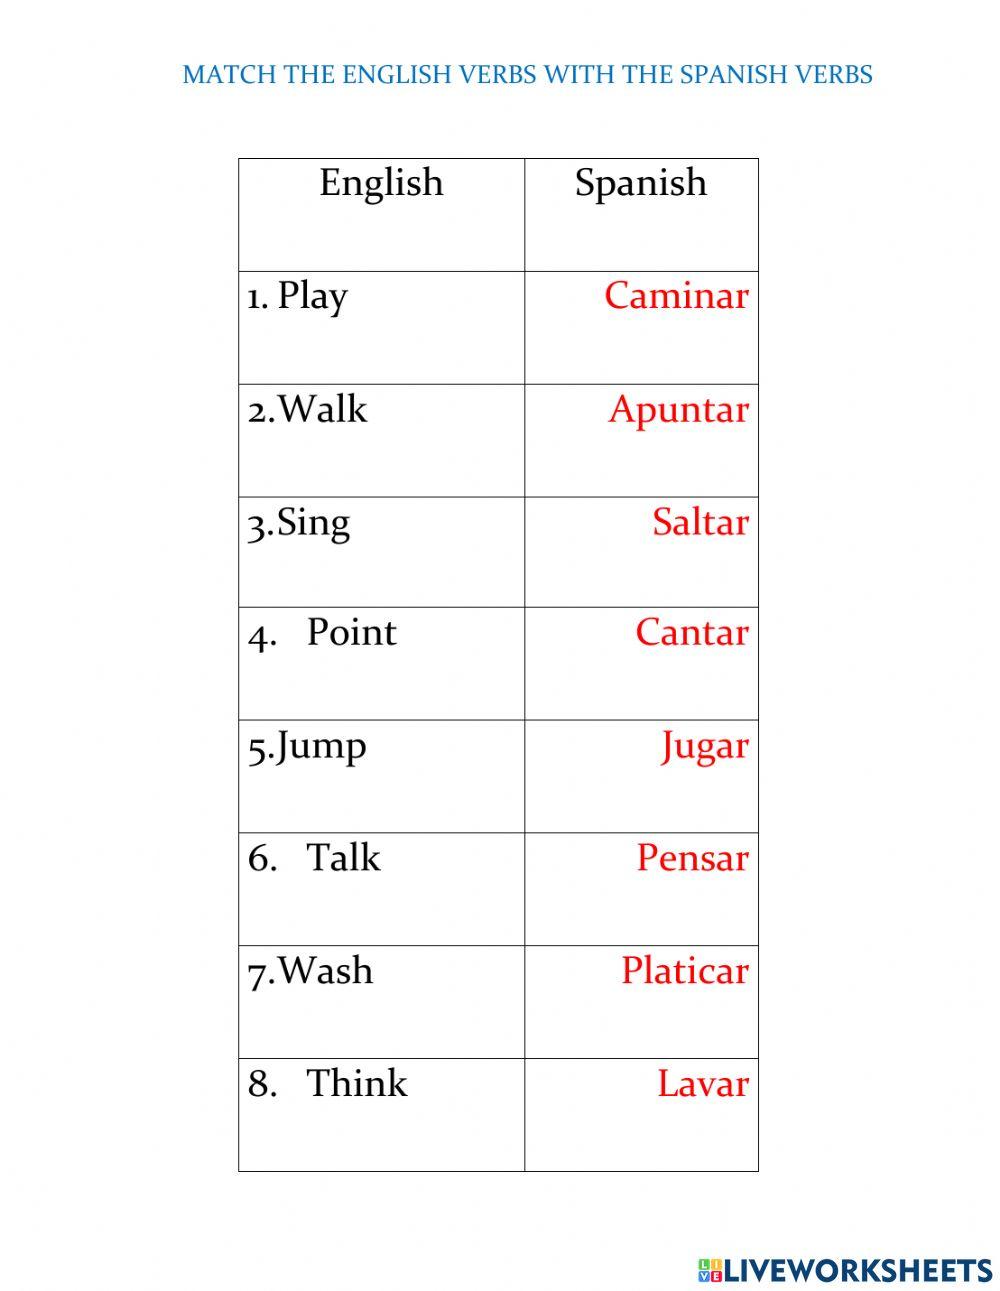 Basic English Verbs into Spanish